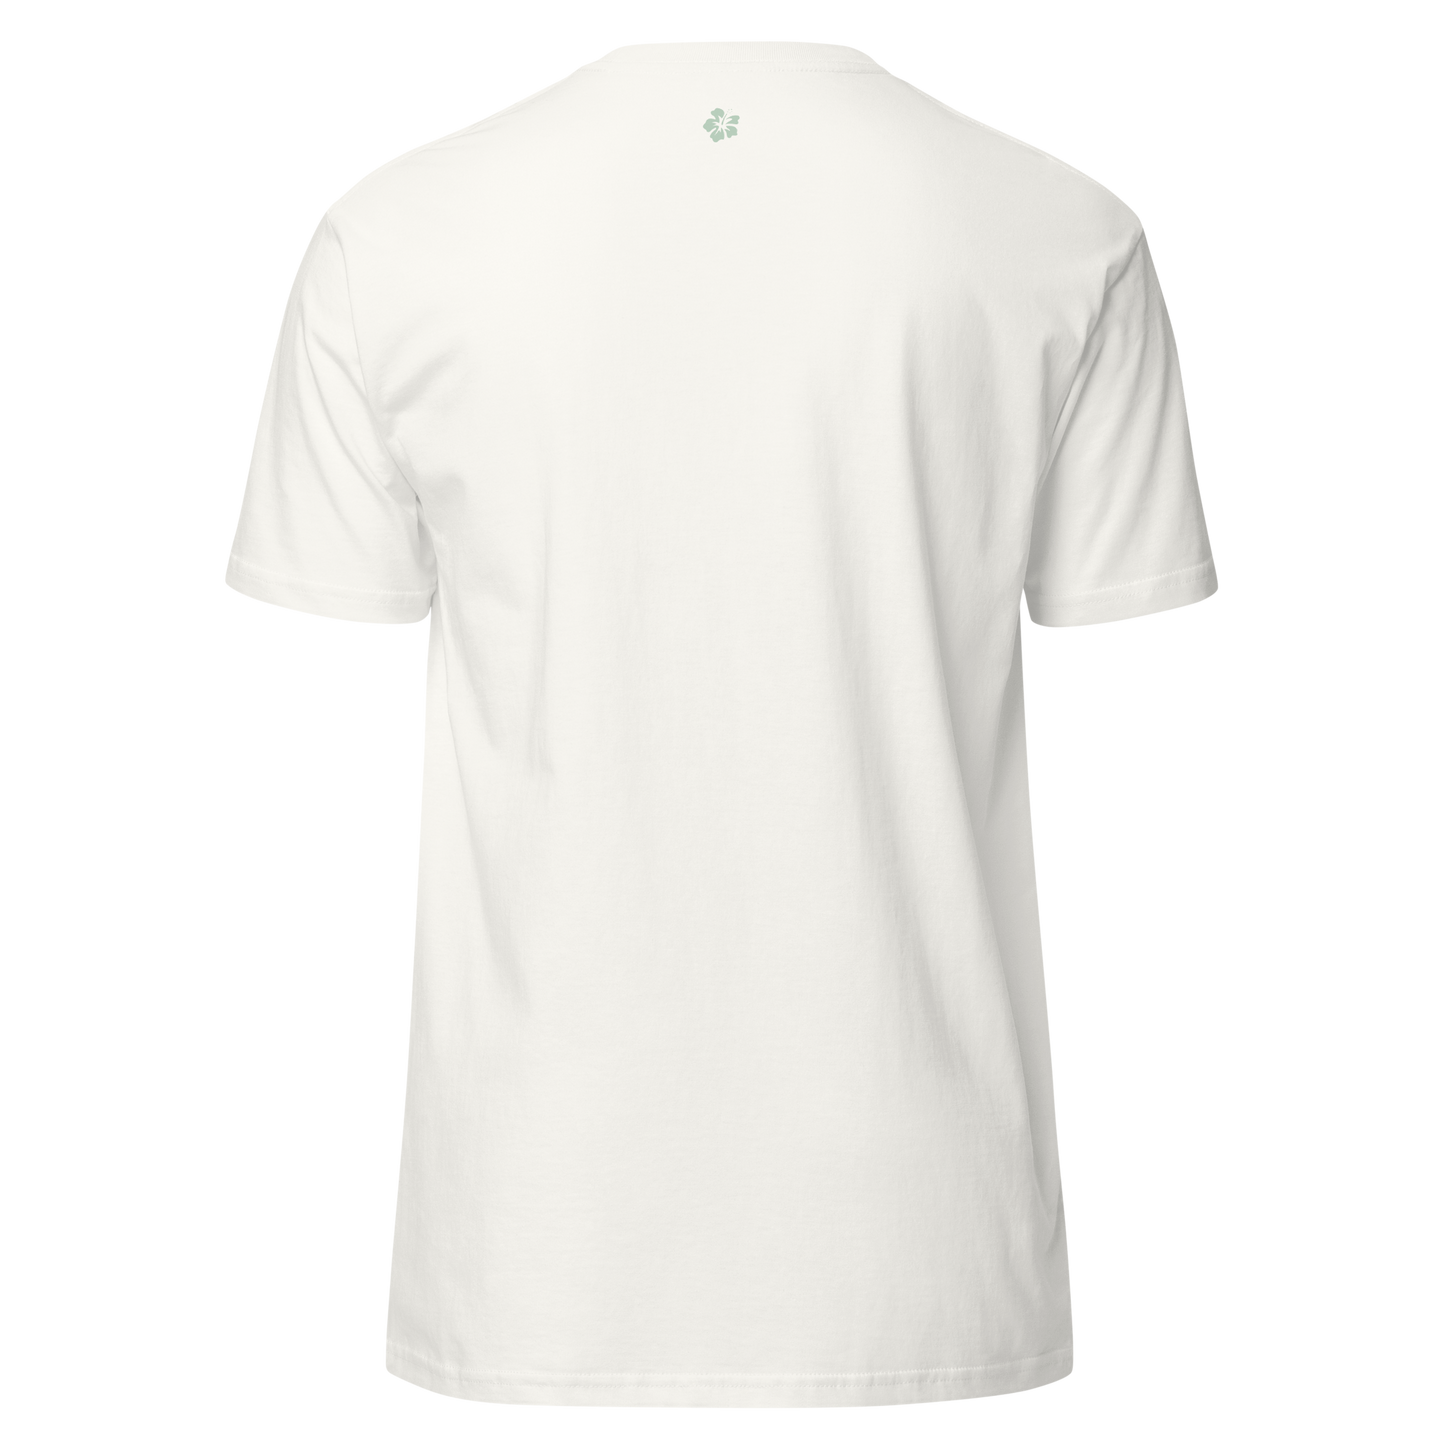 Maungakiekie / One Tree Hill T-shirt miro pararopi